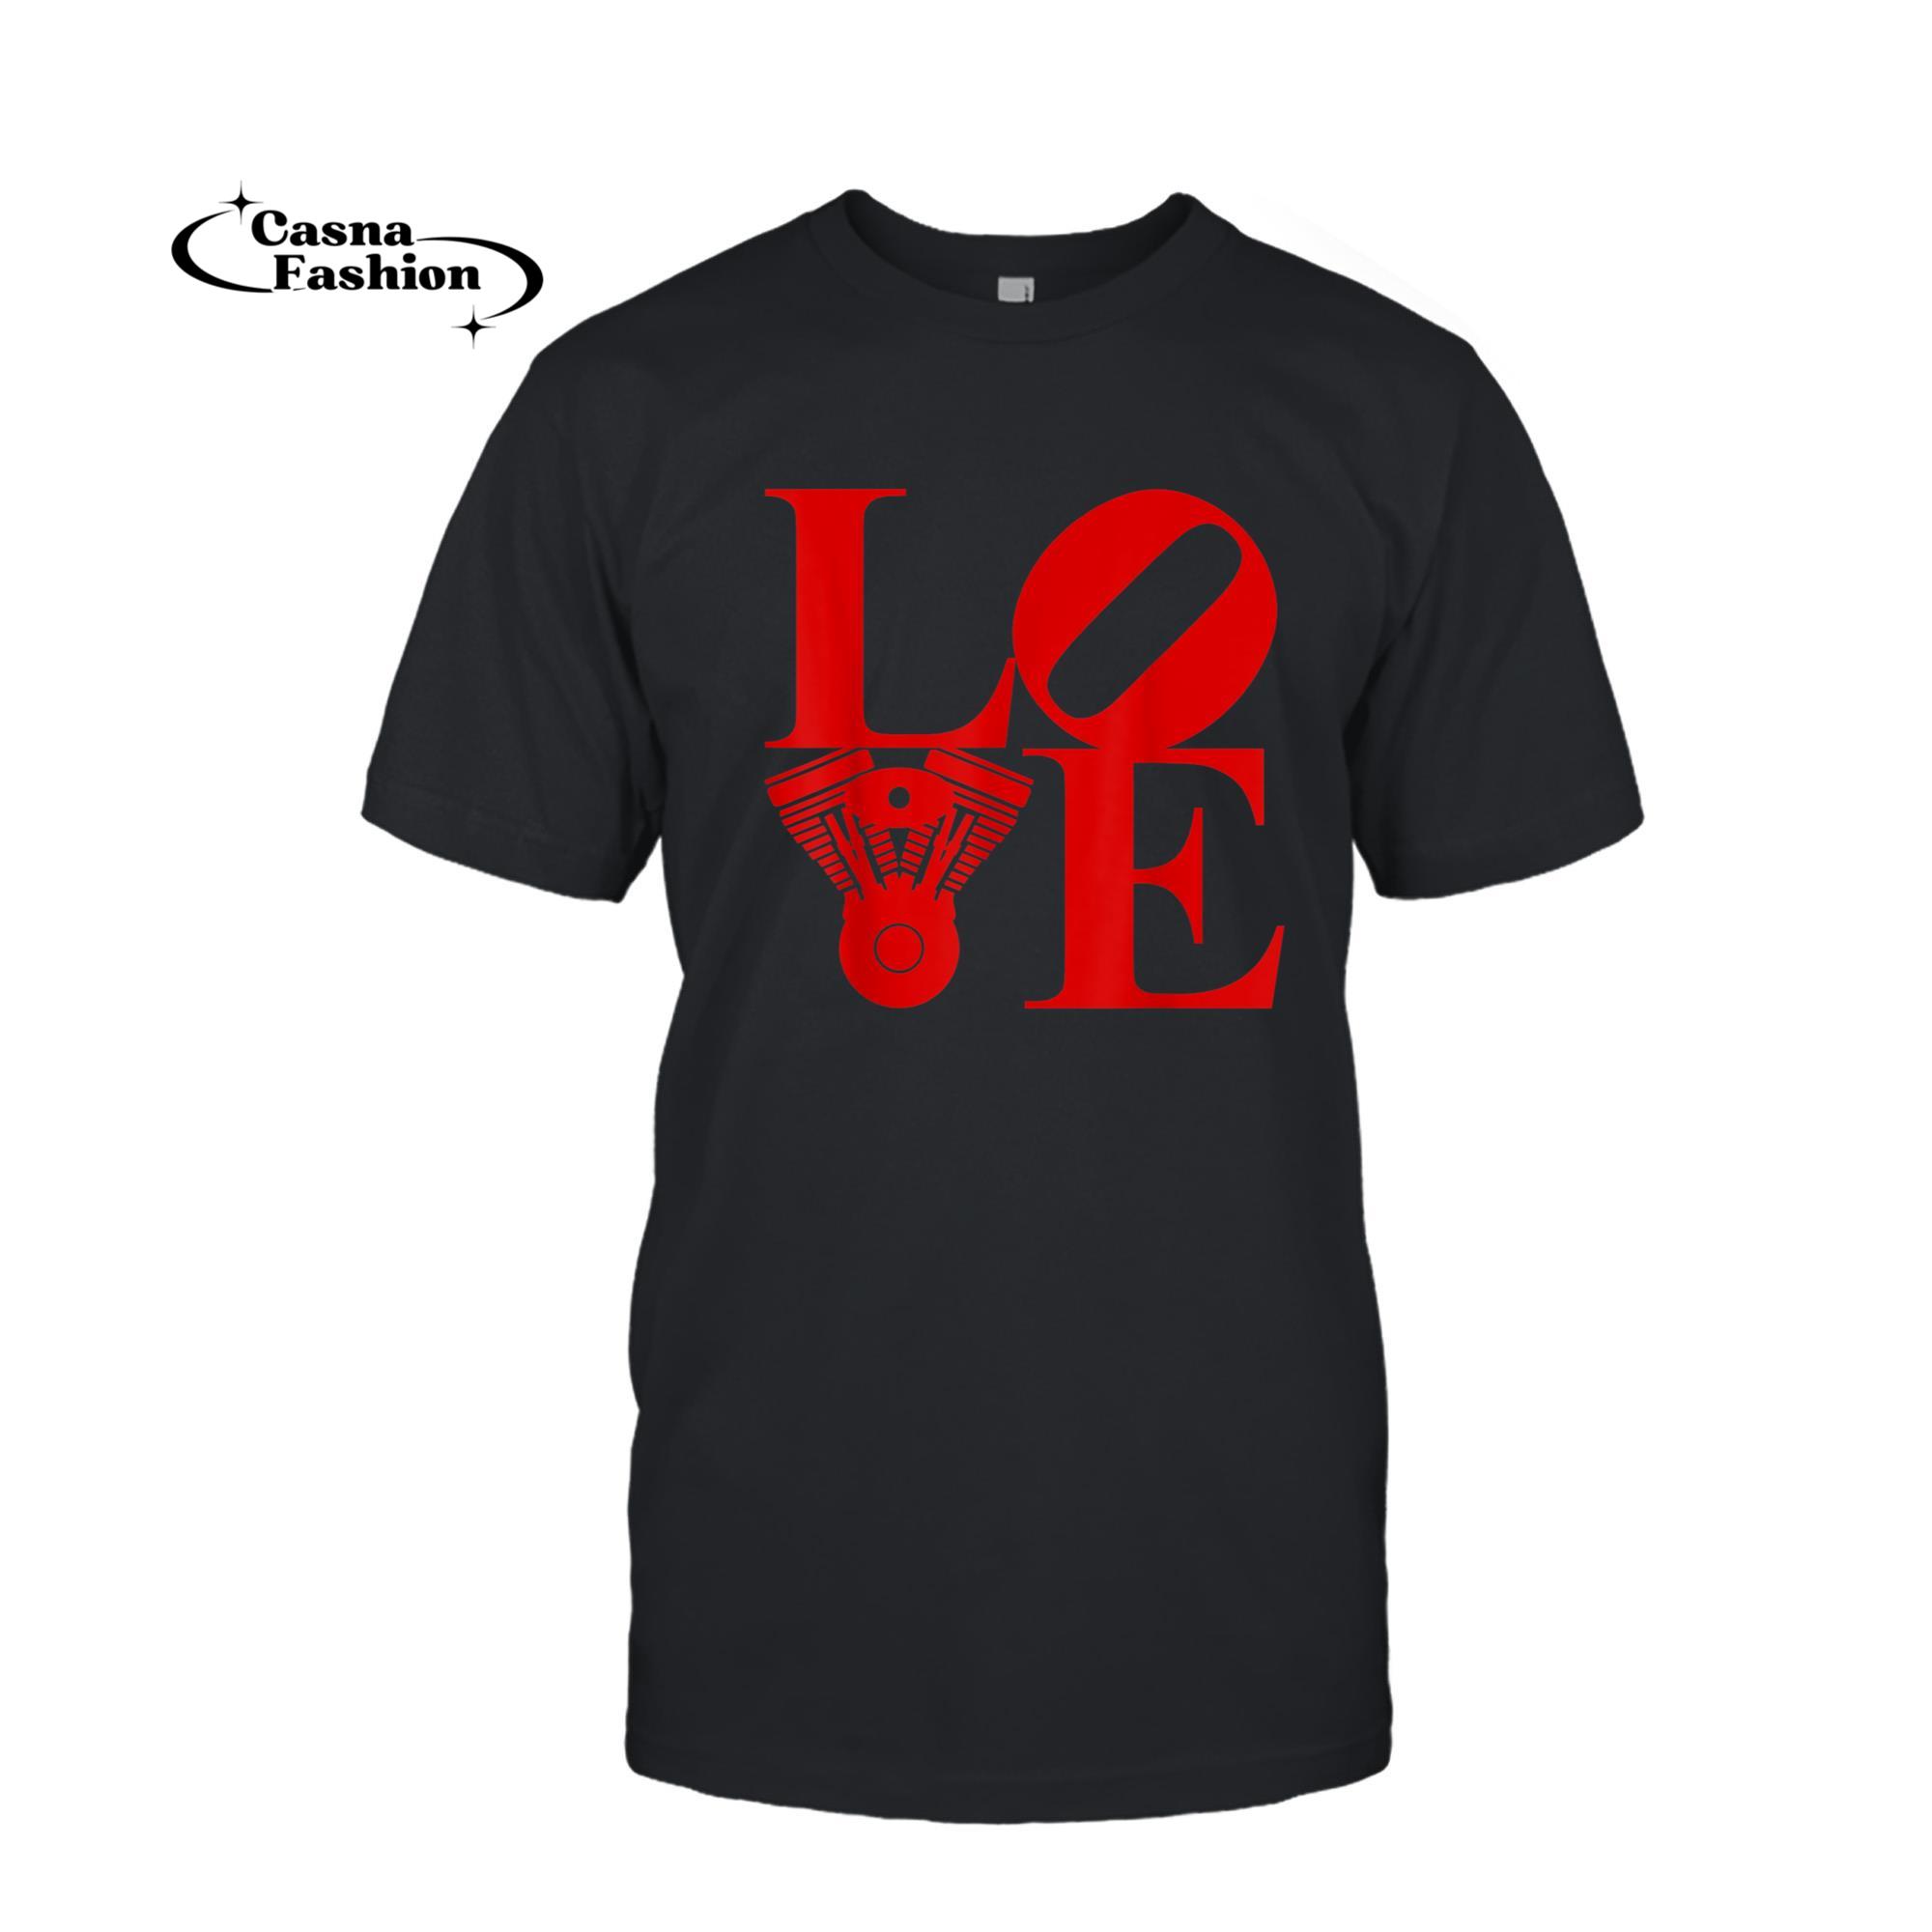 casnafashion_T-shirt_Biker Motorcycle V-Twin Engine, Motor Love Graphic Apparel T-Shirt_T-shirt_Black